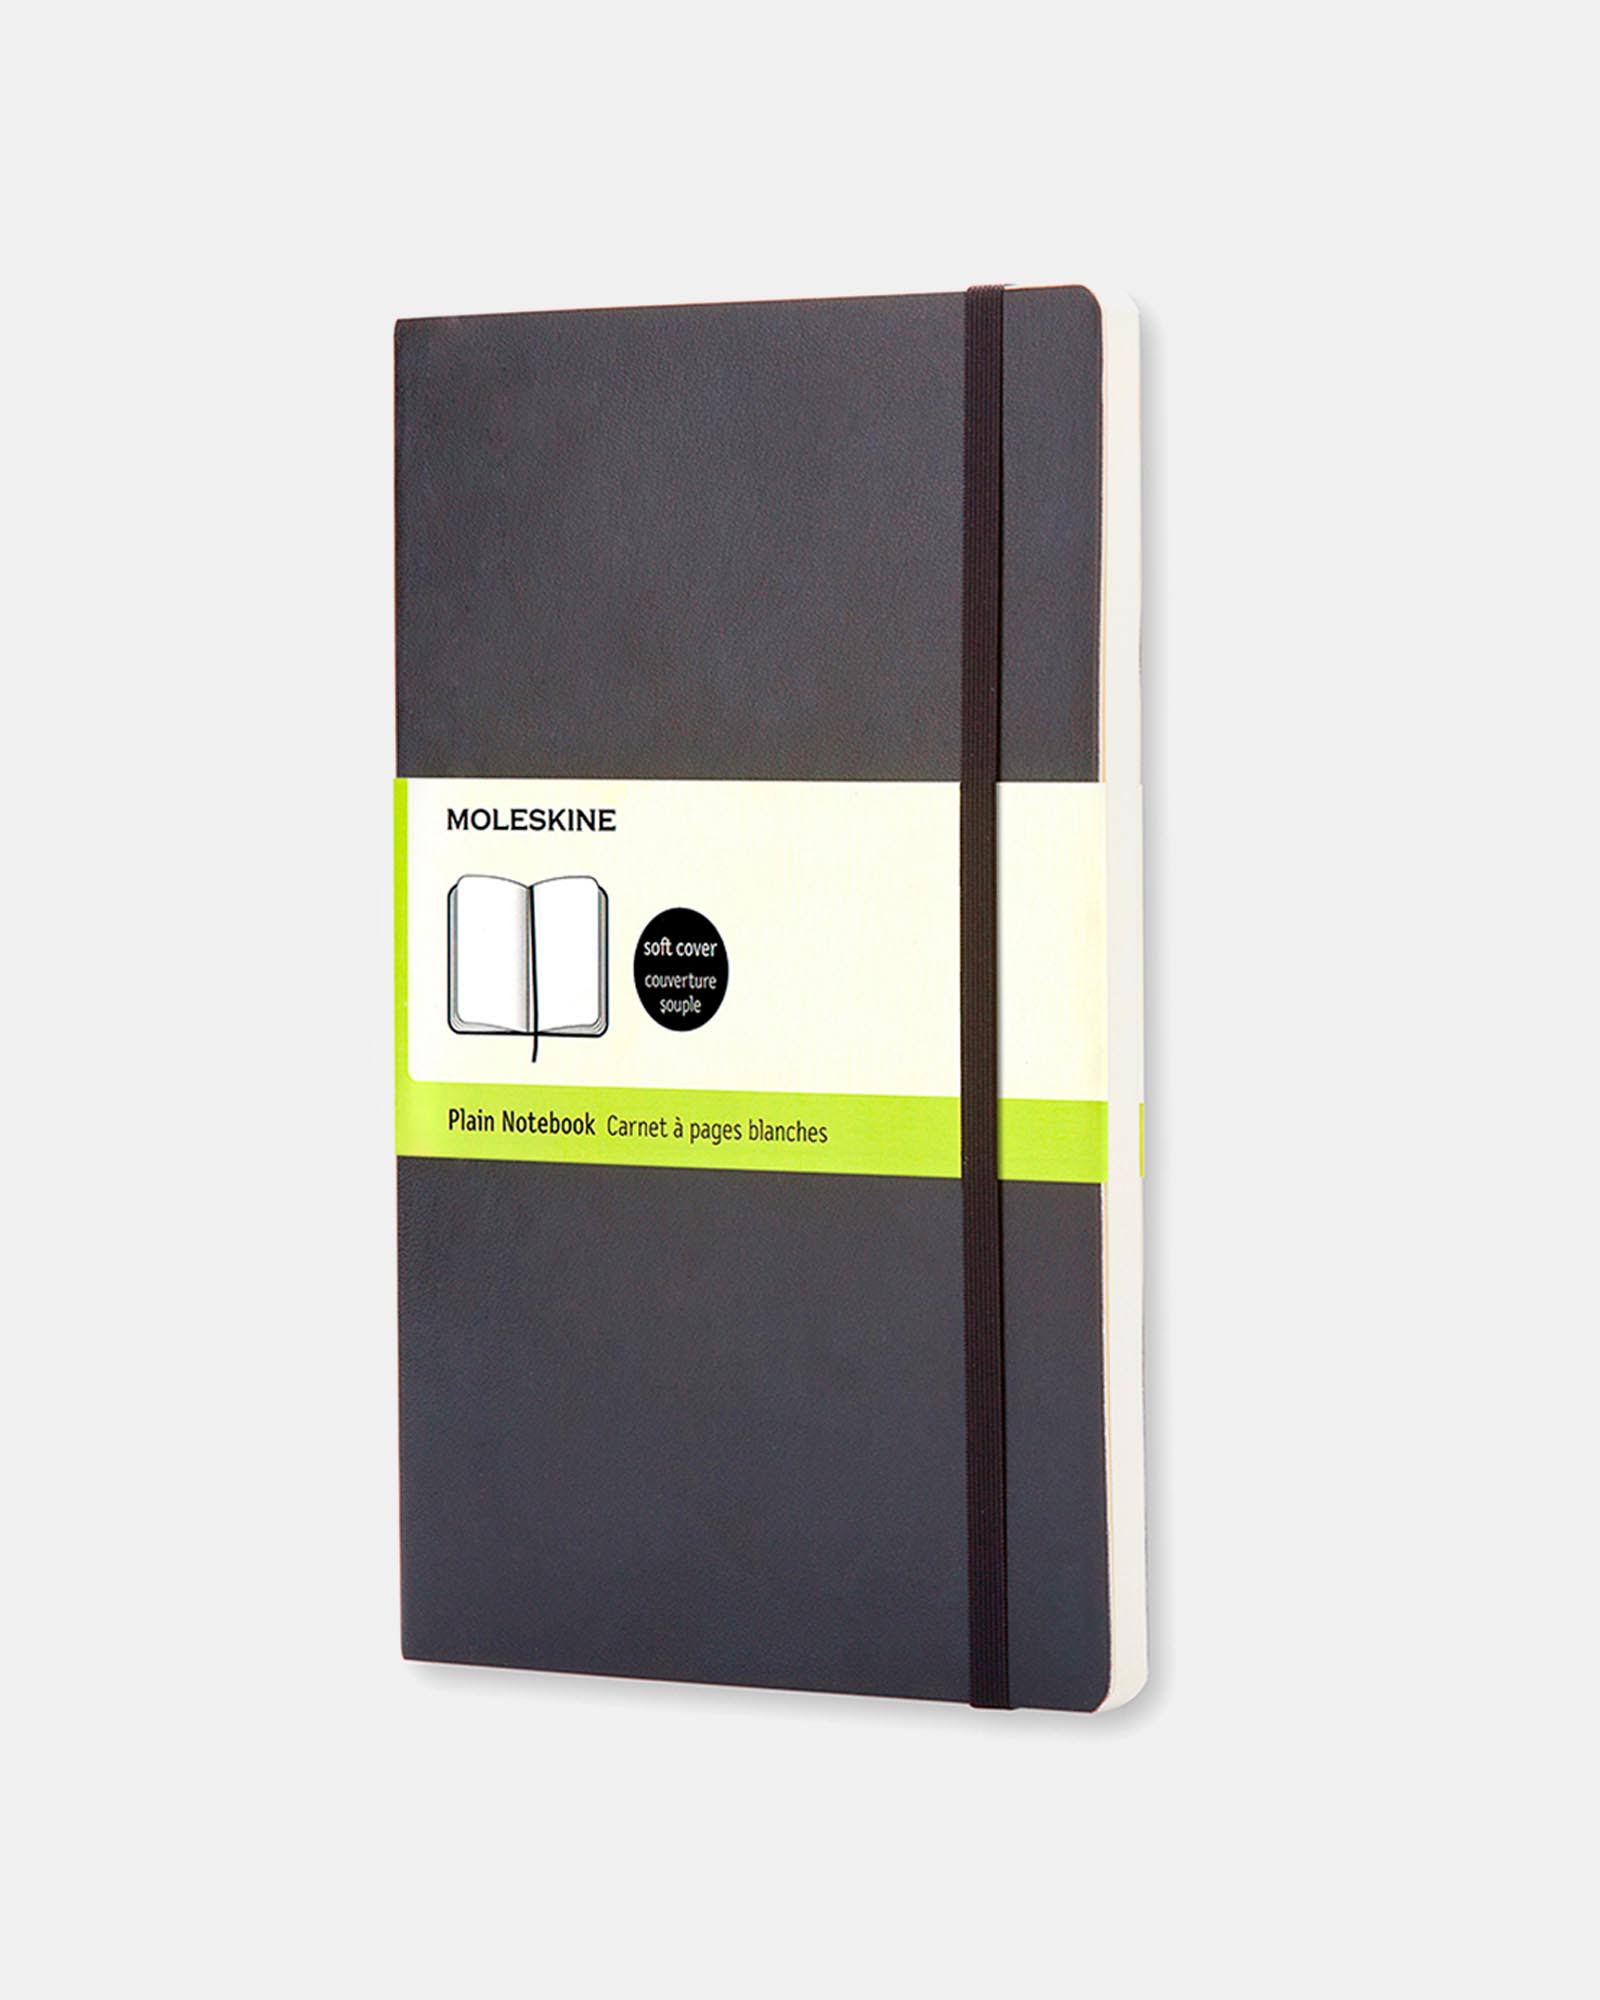 Moleskine Soft Cover Large Plain Notebook